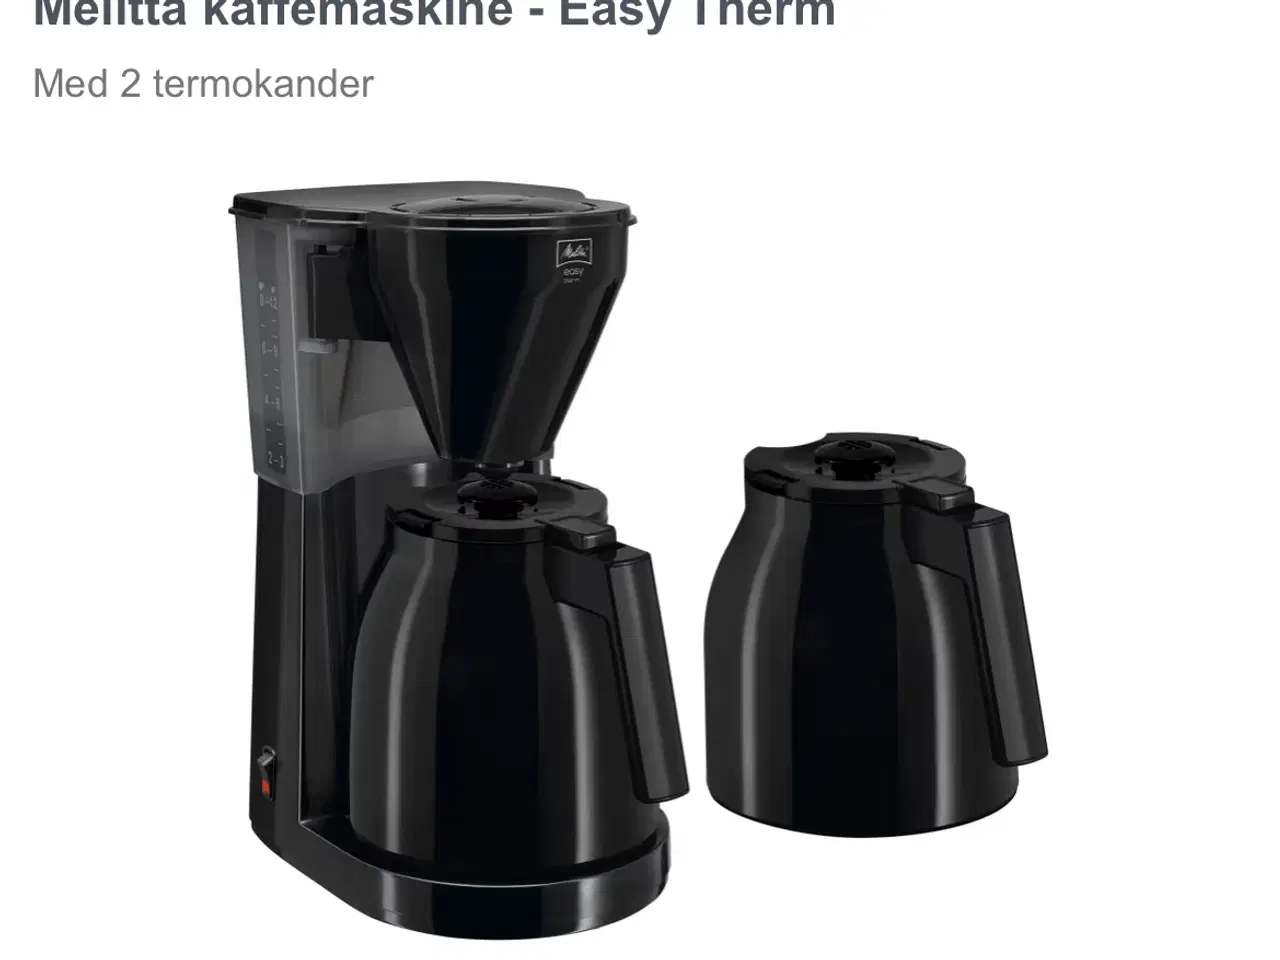 Billede 1 - Melitta Kaffemaskine Easy Therm sort 2 kander